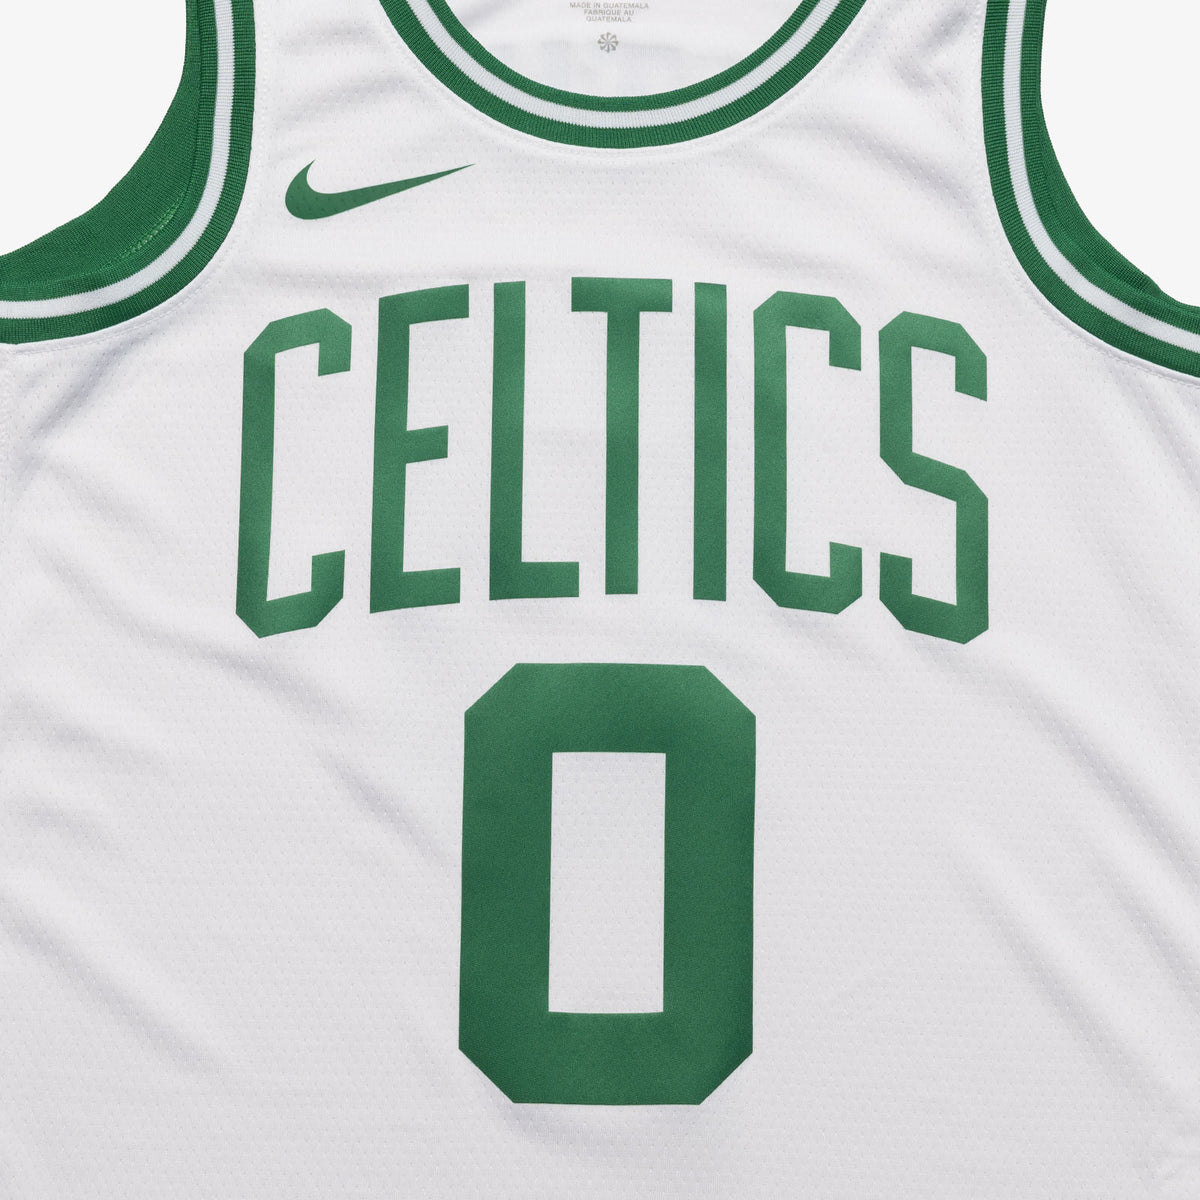 Boston Celtics Nike Classic Edition Swingman Jersey - White - Jayson Tatum  - Mens